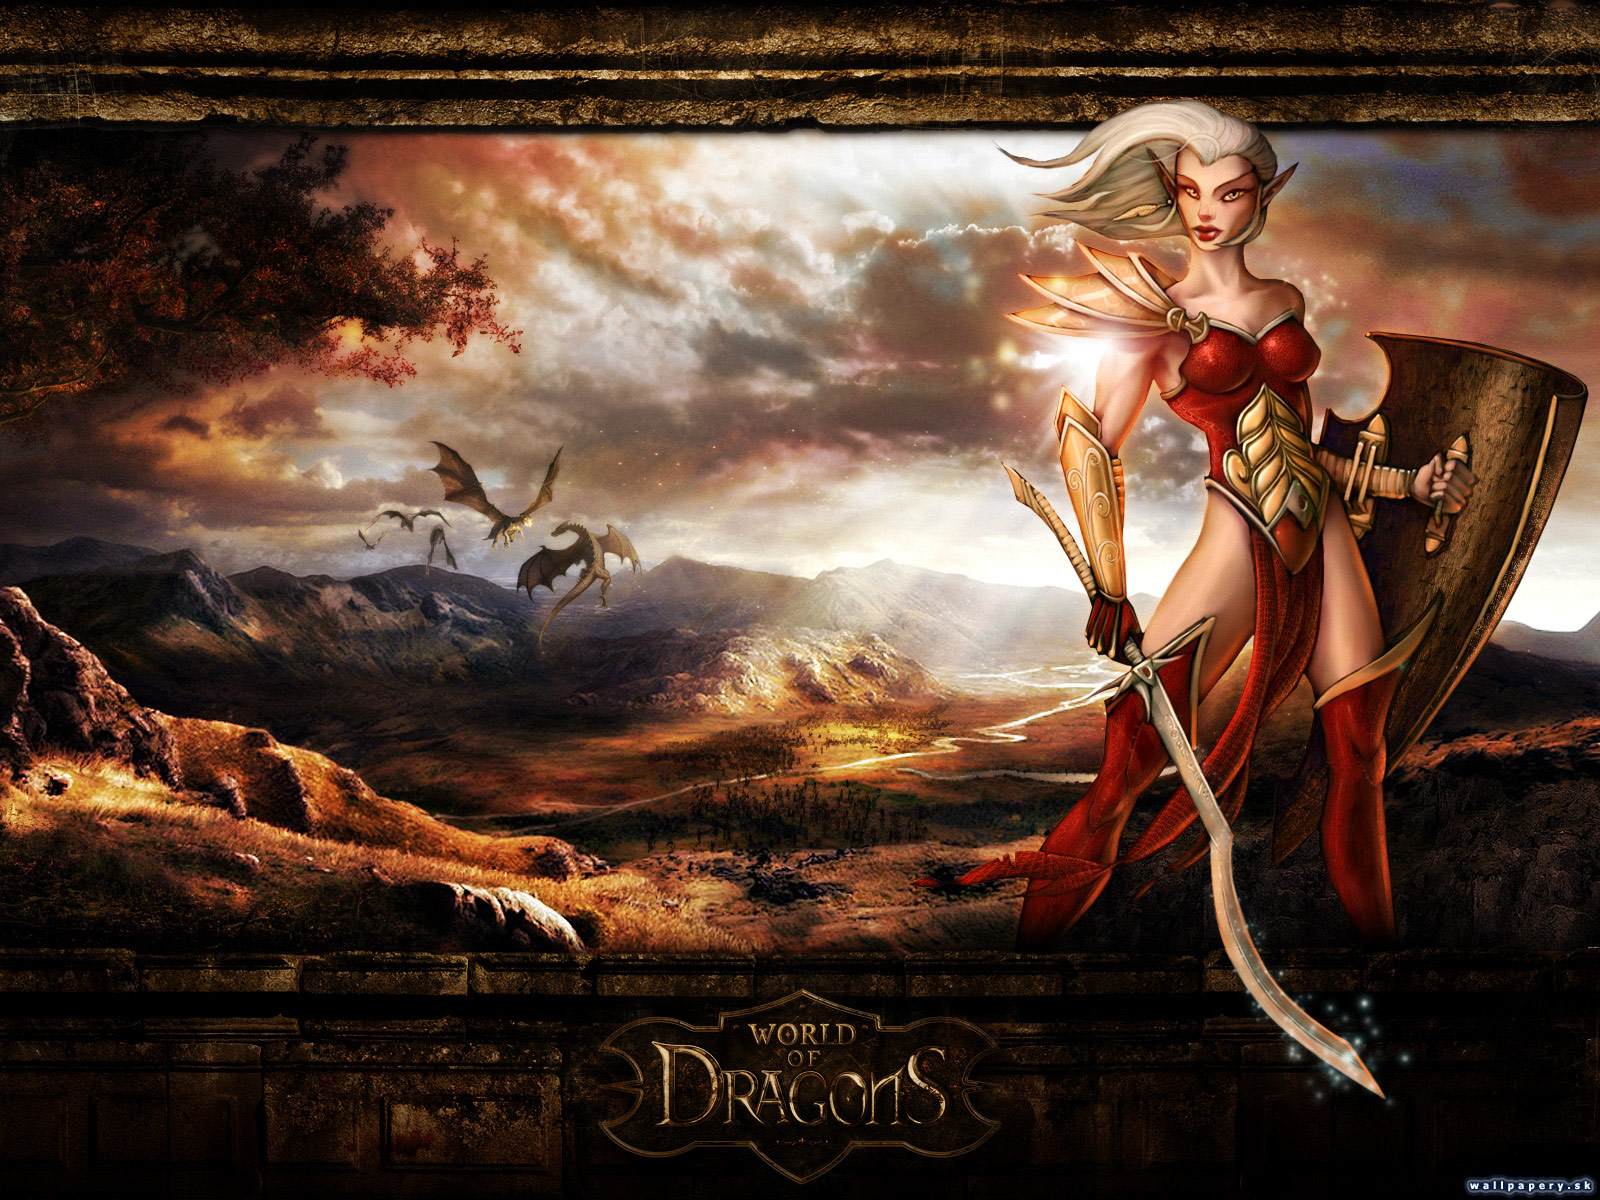 World of Dragons - wallpaper 2